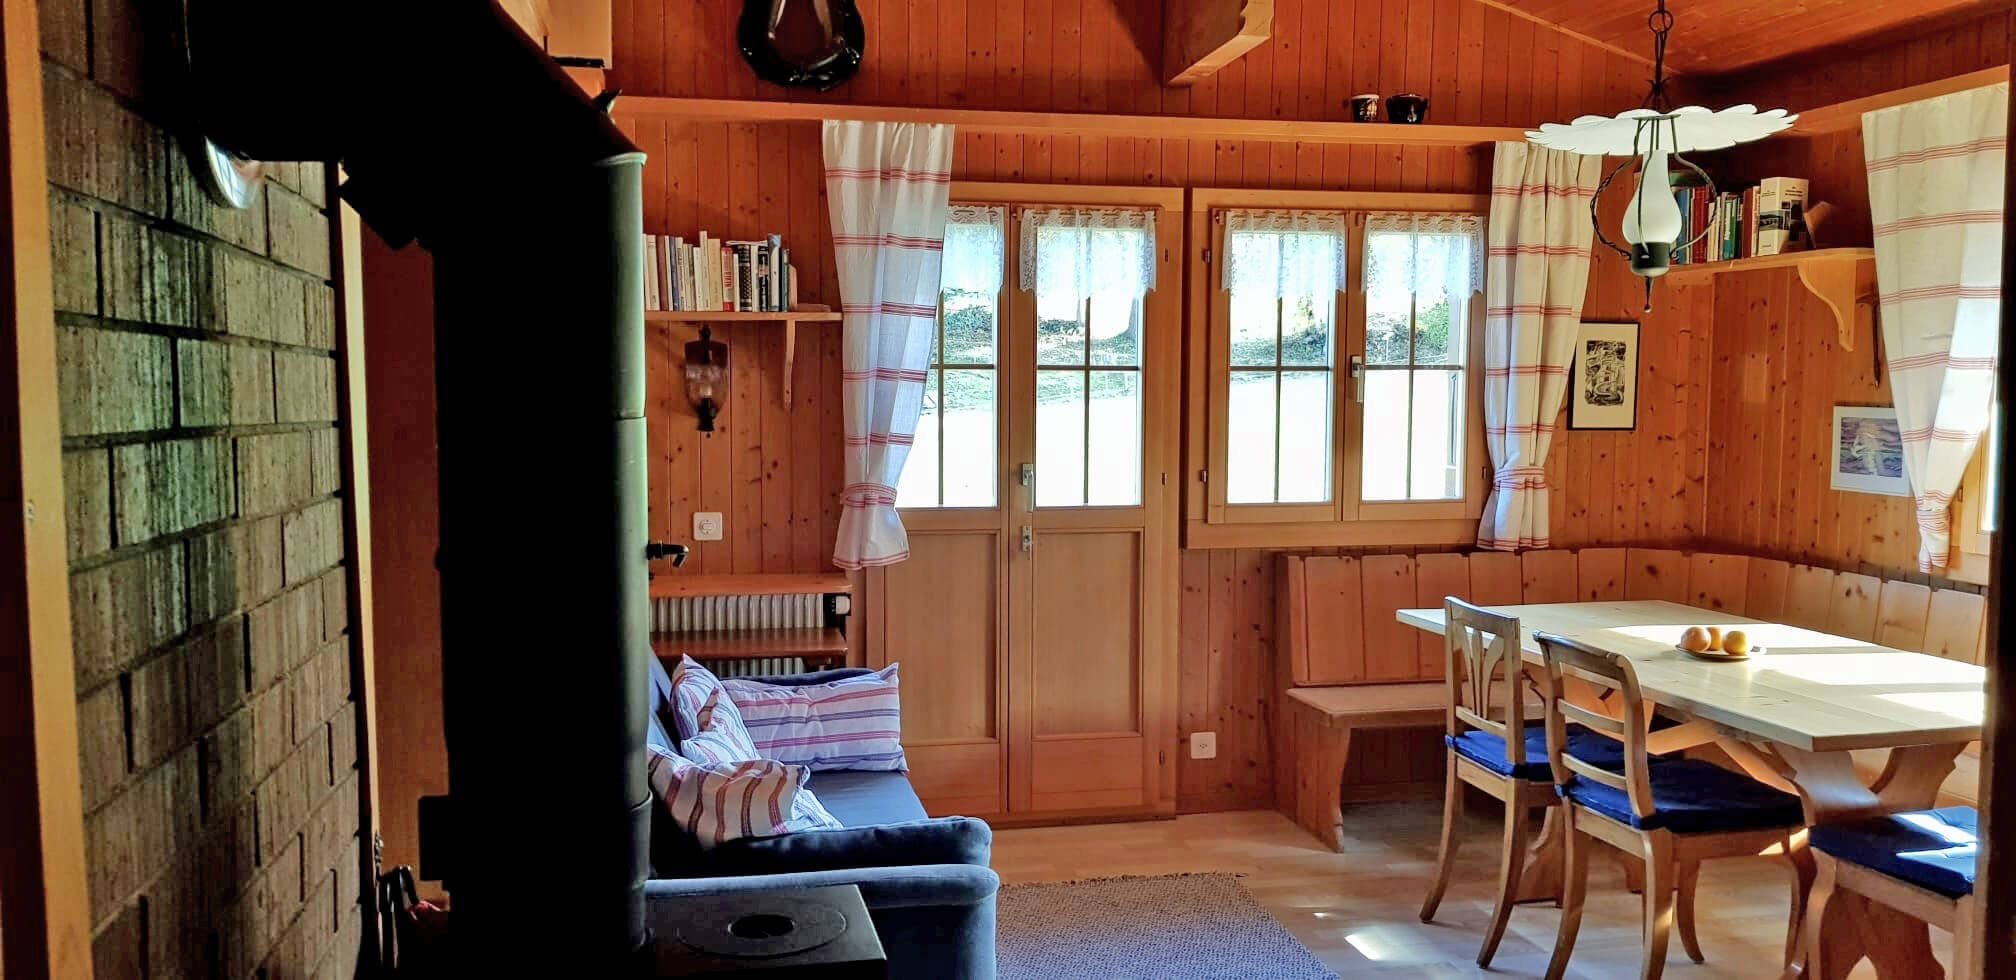 Living room with Swedish stove